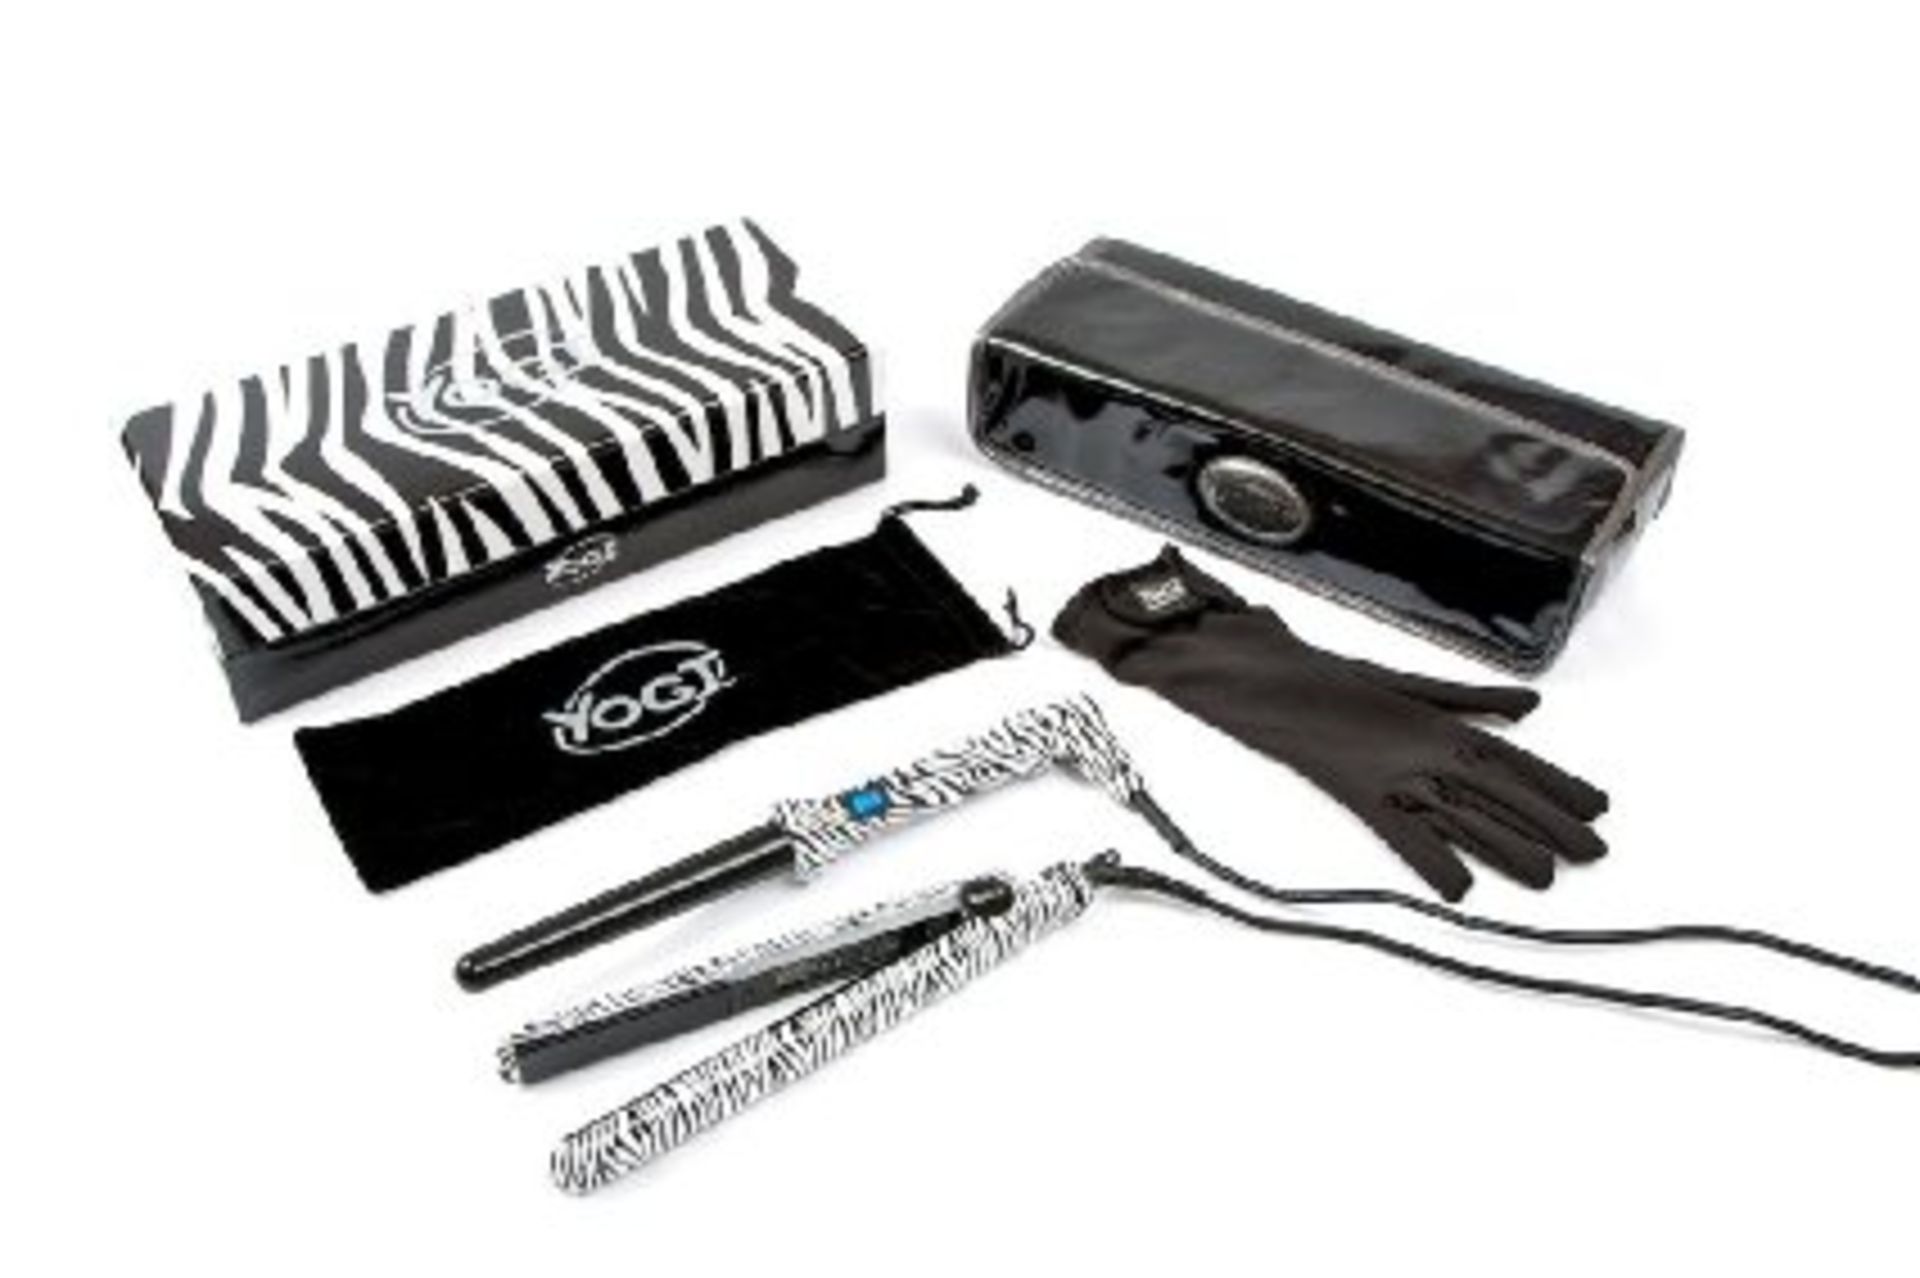 V Brand New Yogi Gift Set Twin Pack Straightener And Wand In Zebra Pattern RRP £129.99 - Image 3 of 4